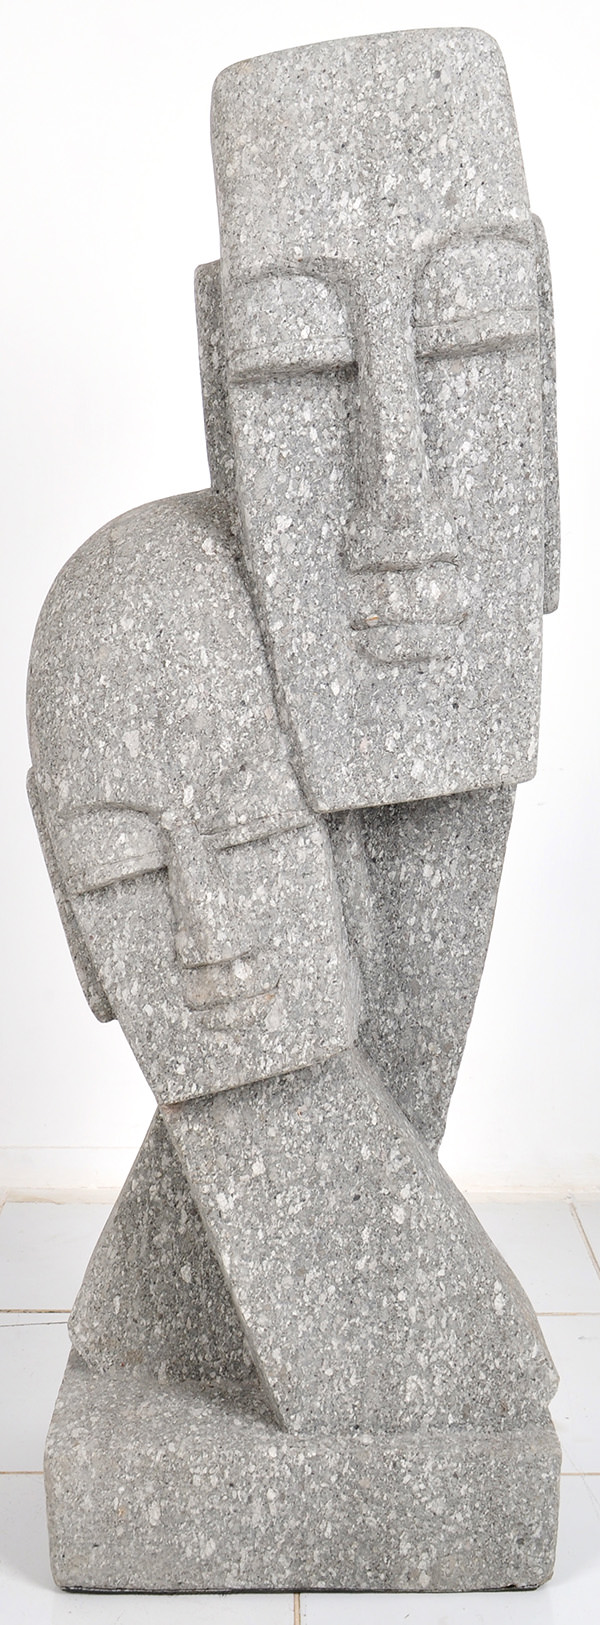 primitive ethnic heads stone sculpture